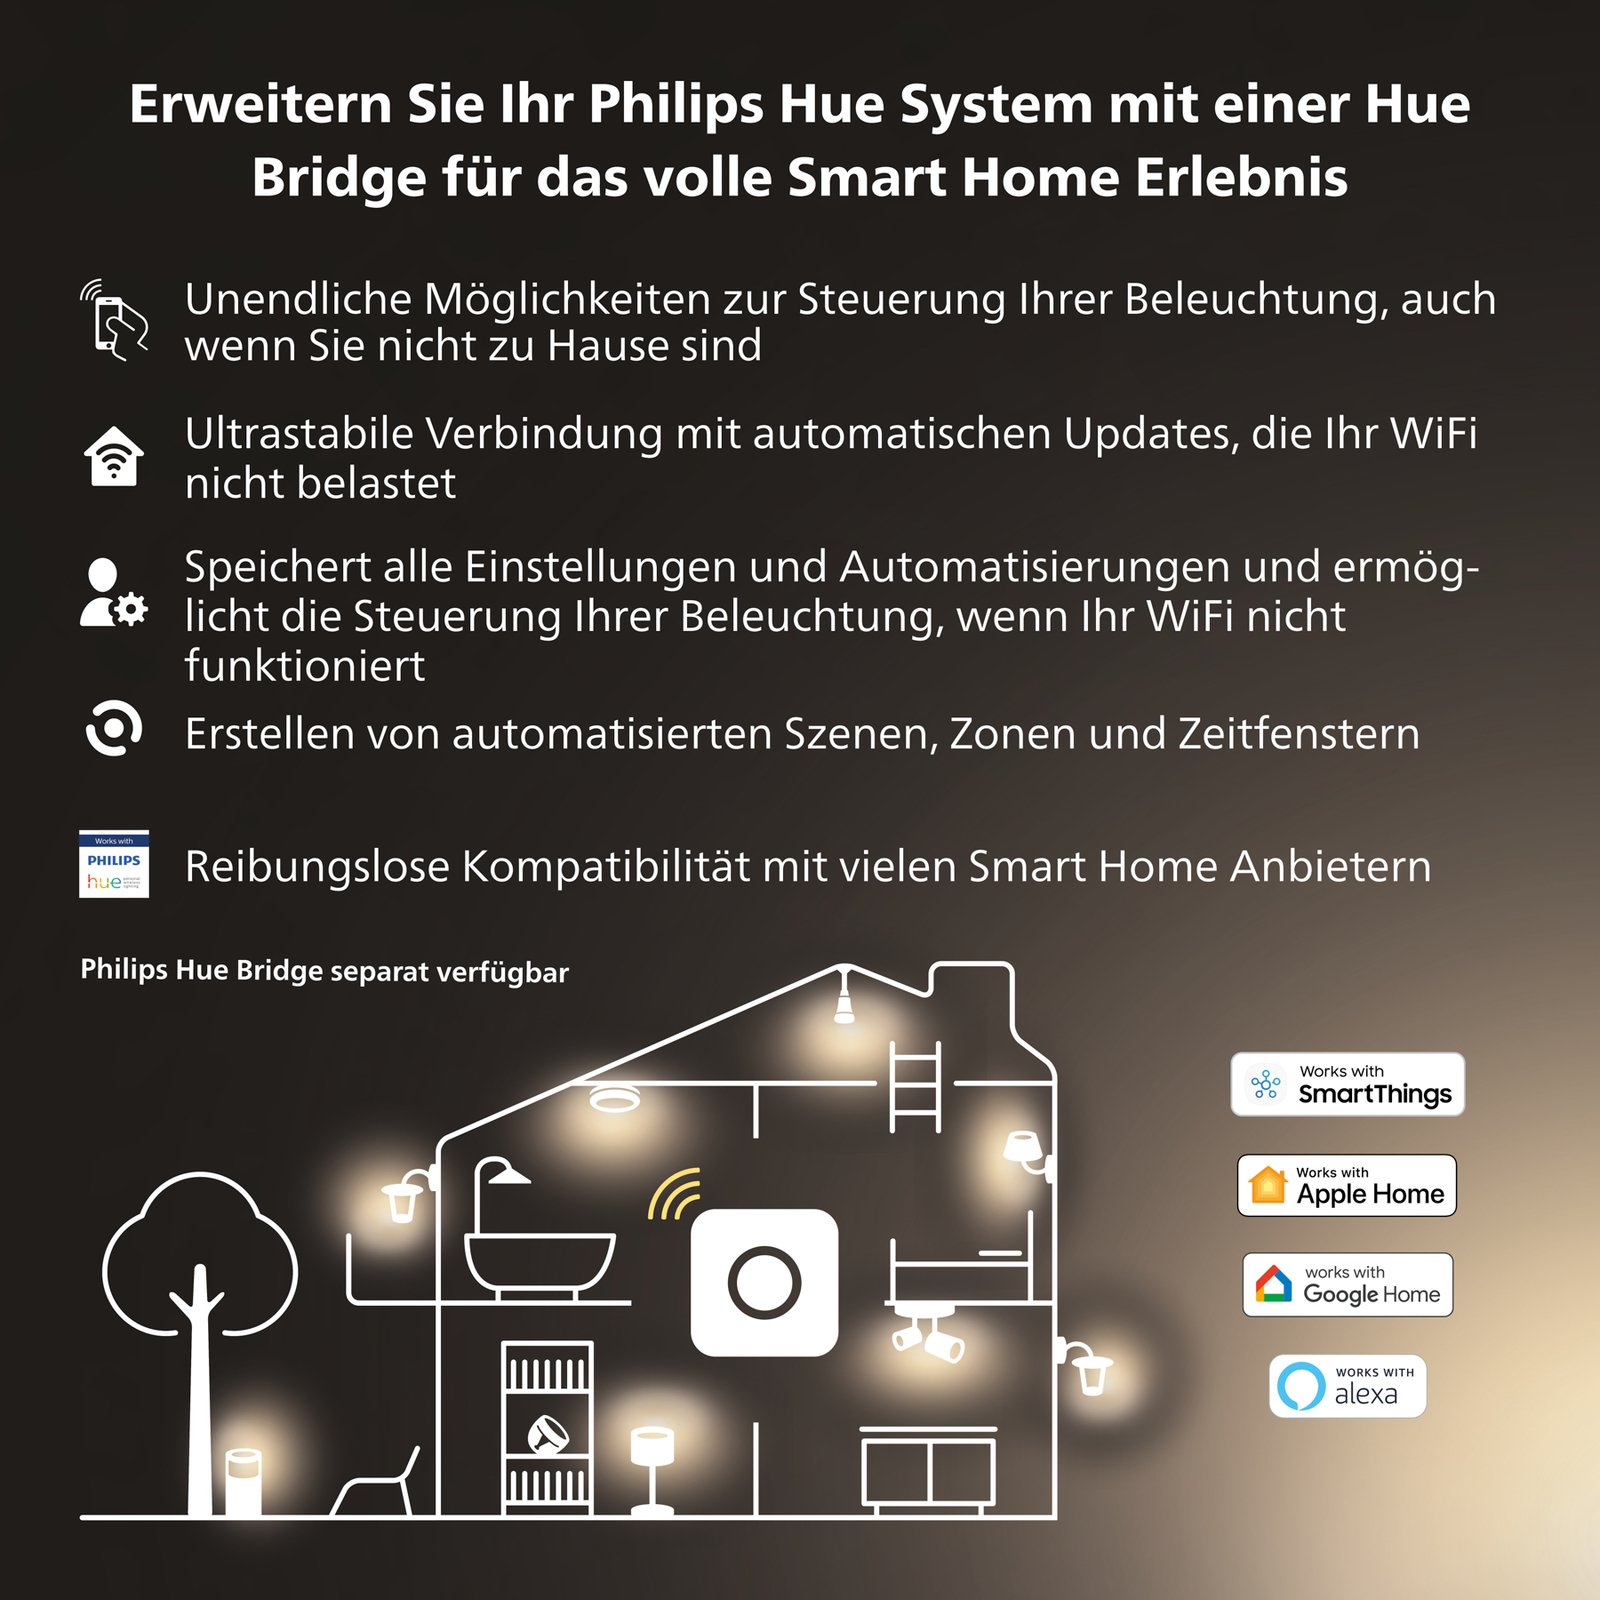 Philips Hue White Ambiance E27 13,5 W LED žiarovka